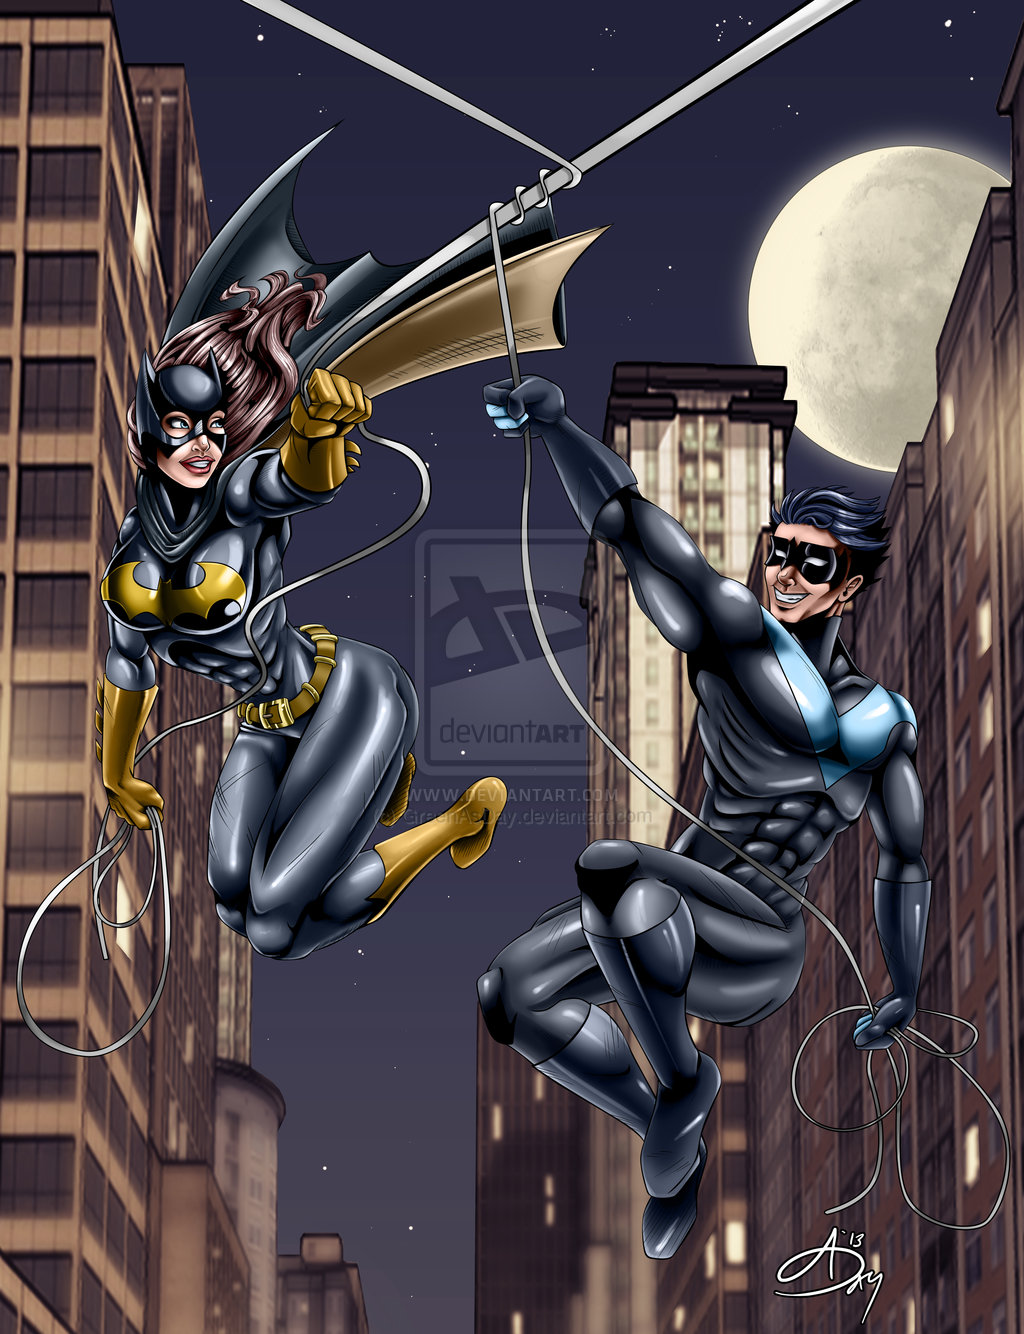 Nightwing and Batgirl by AshDayArt on